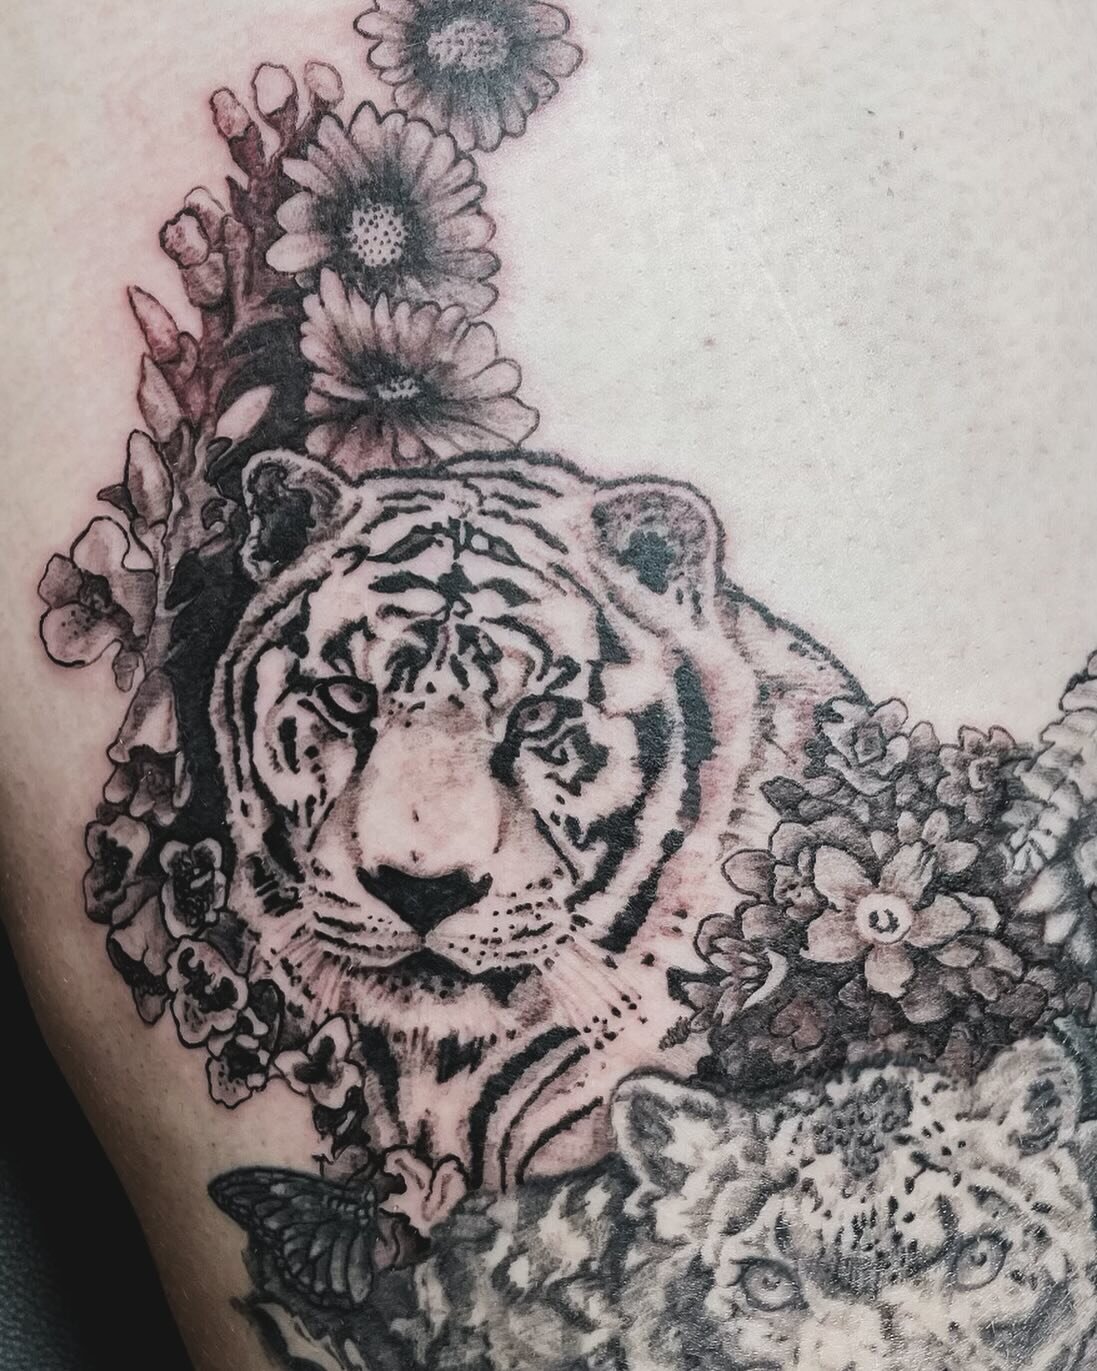 Beautiful tiger by @mortalcoiltattoo! 🐅🖤

#tattoo #tattoos #art #bayarea  #bayareaartists #bayareatattoos #oakland #oaklandartists #oaklandtattooartist #bayareatattoo #tiger #tigertattoo #realism #realismtattoo #studionoir